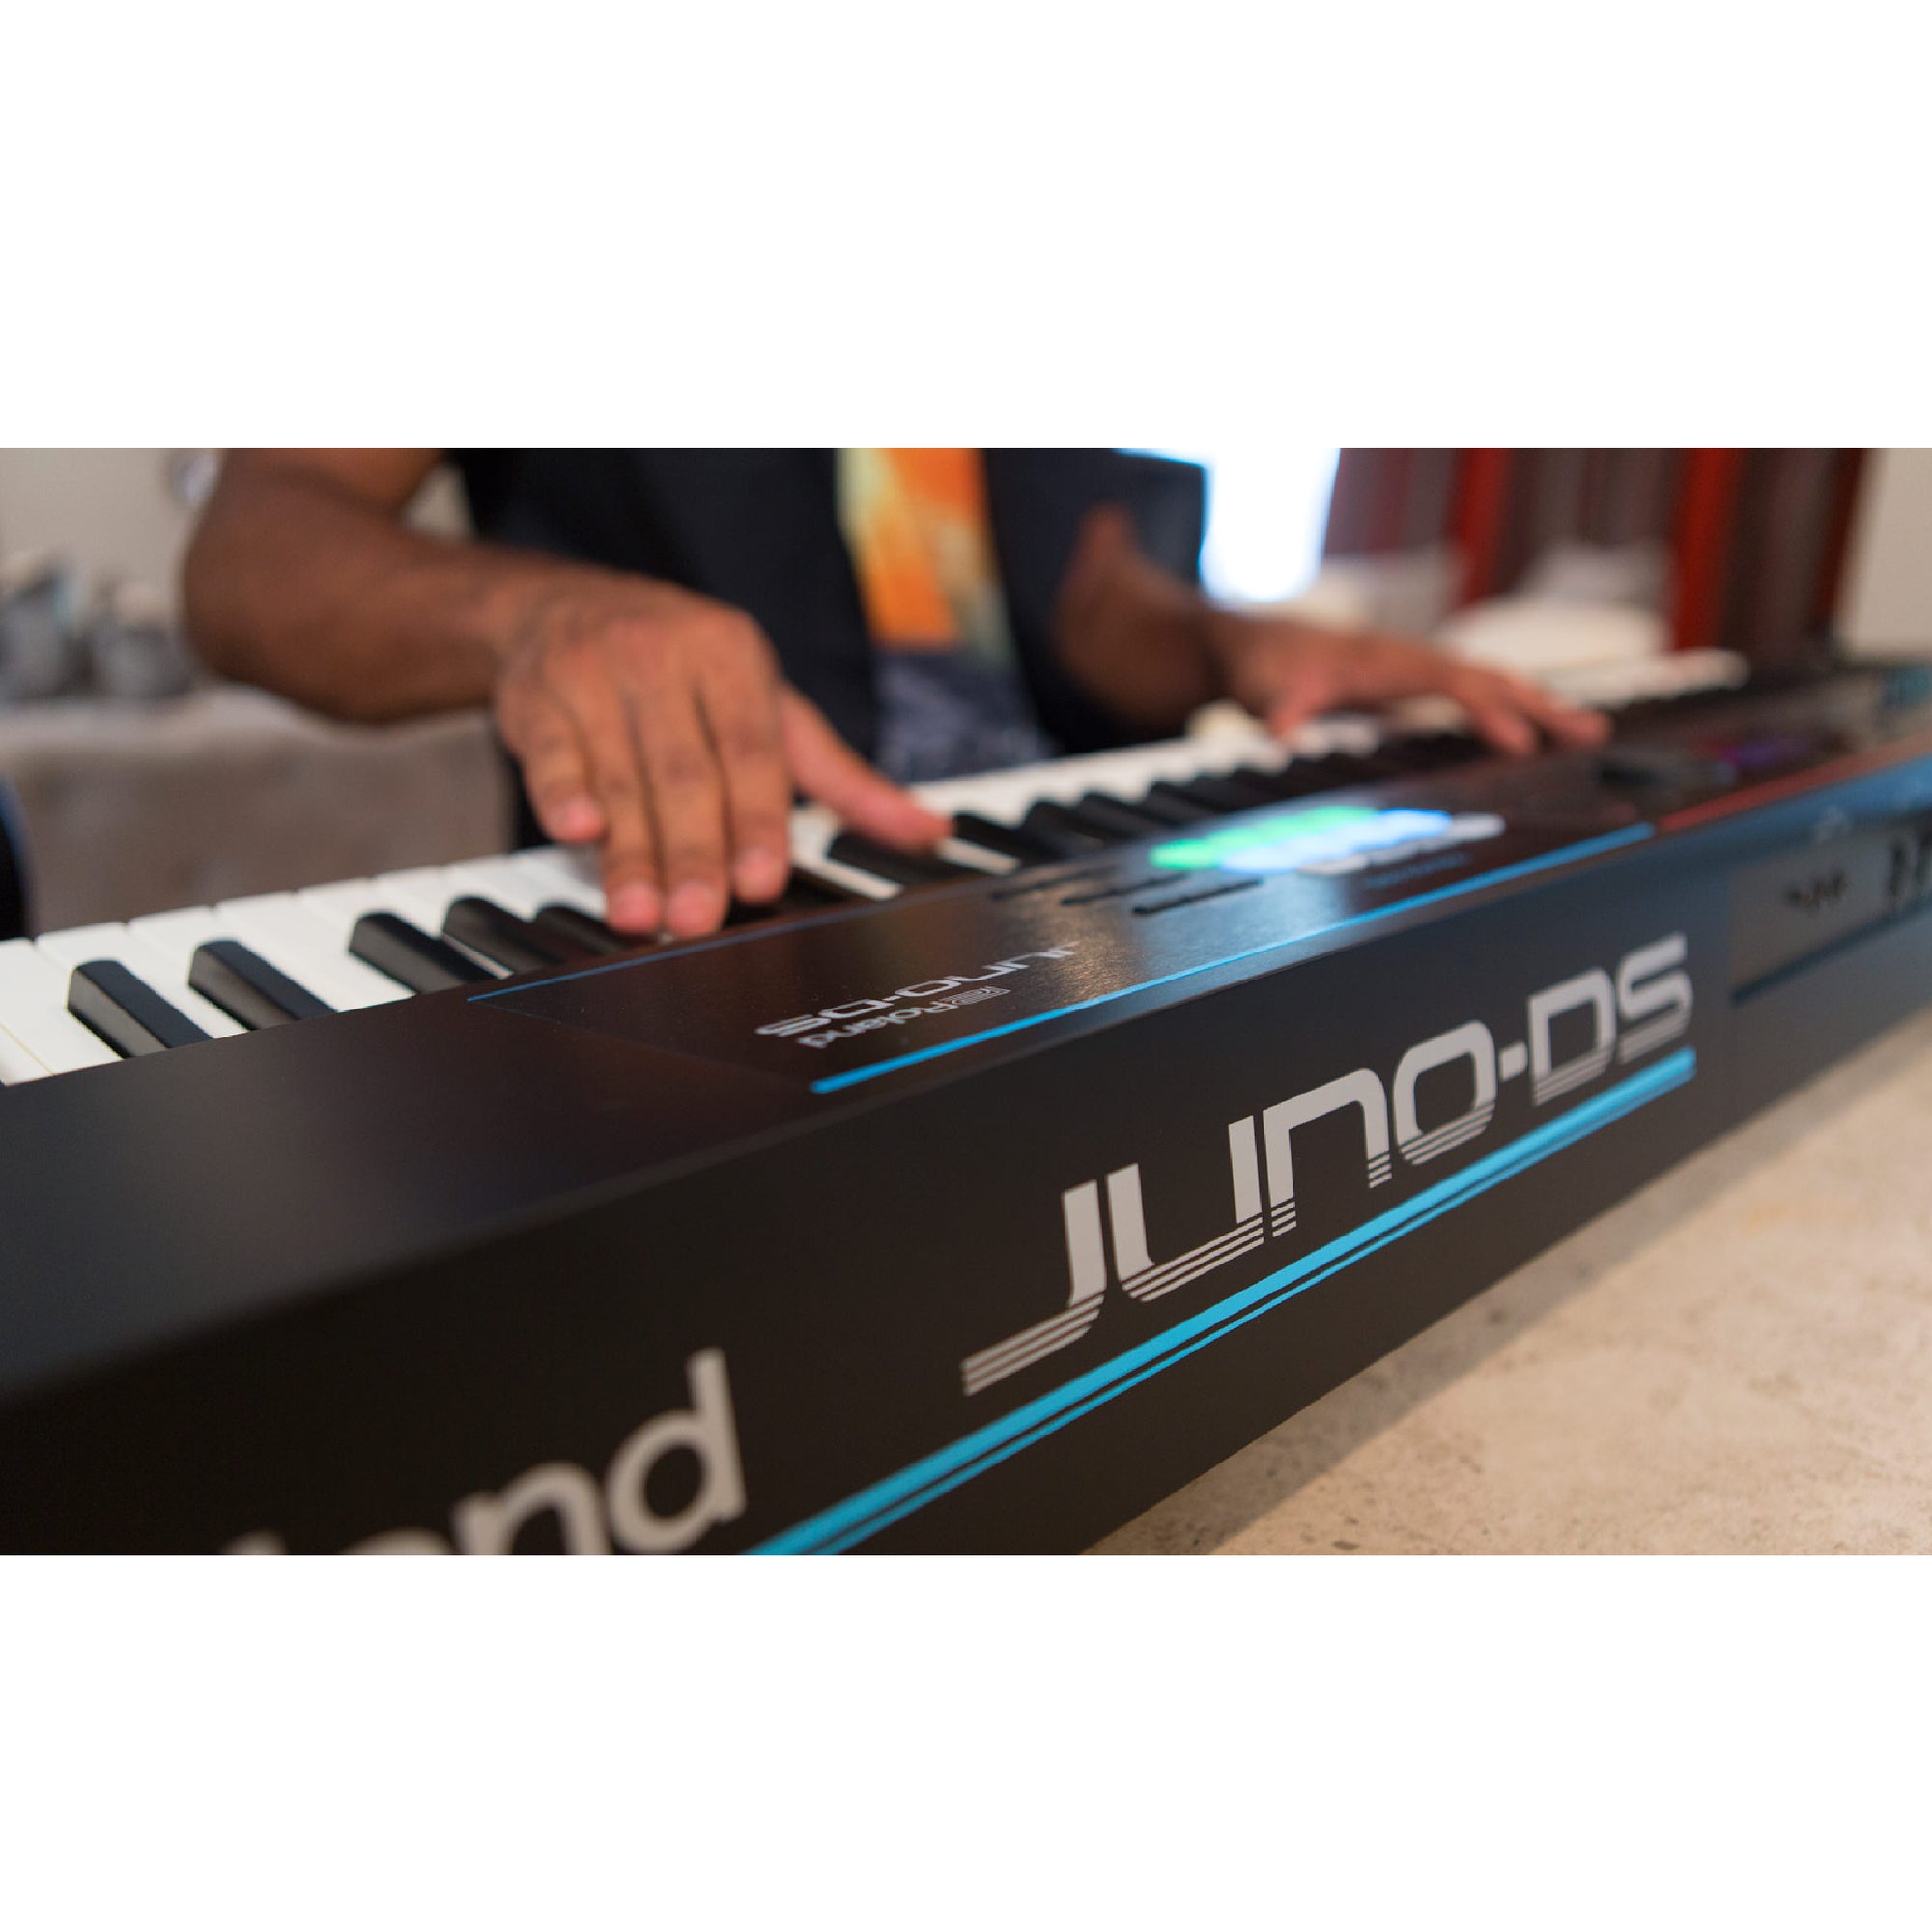 Roland JUNO-DS88 88-Key Synthesizer